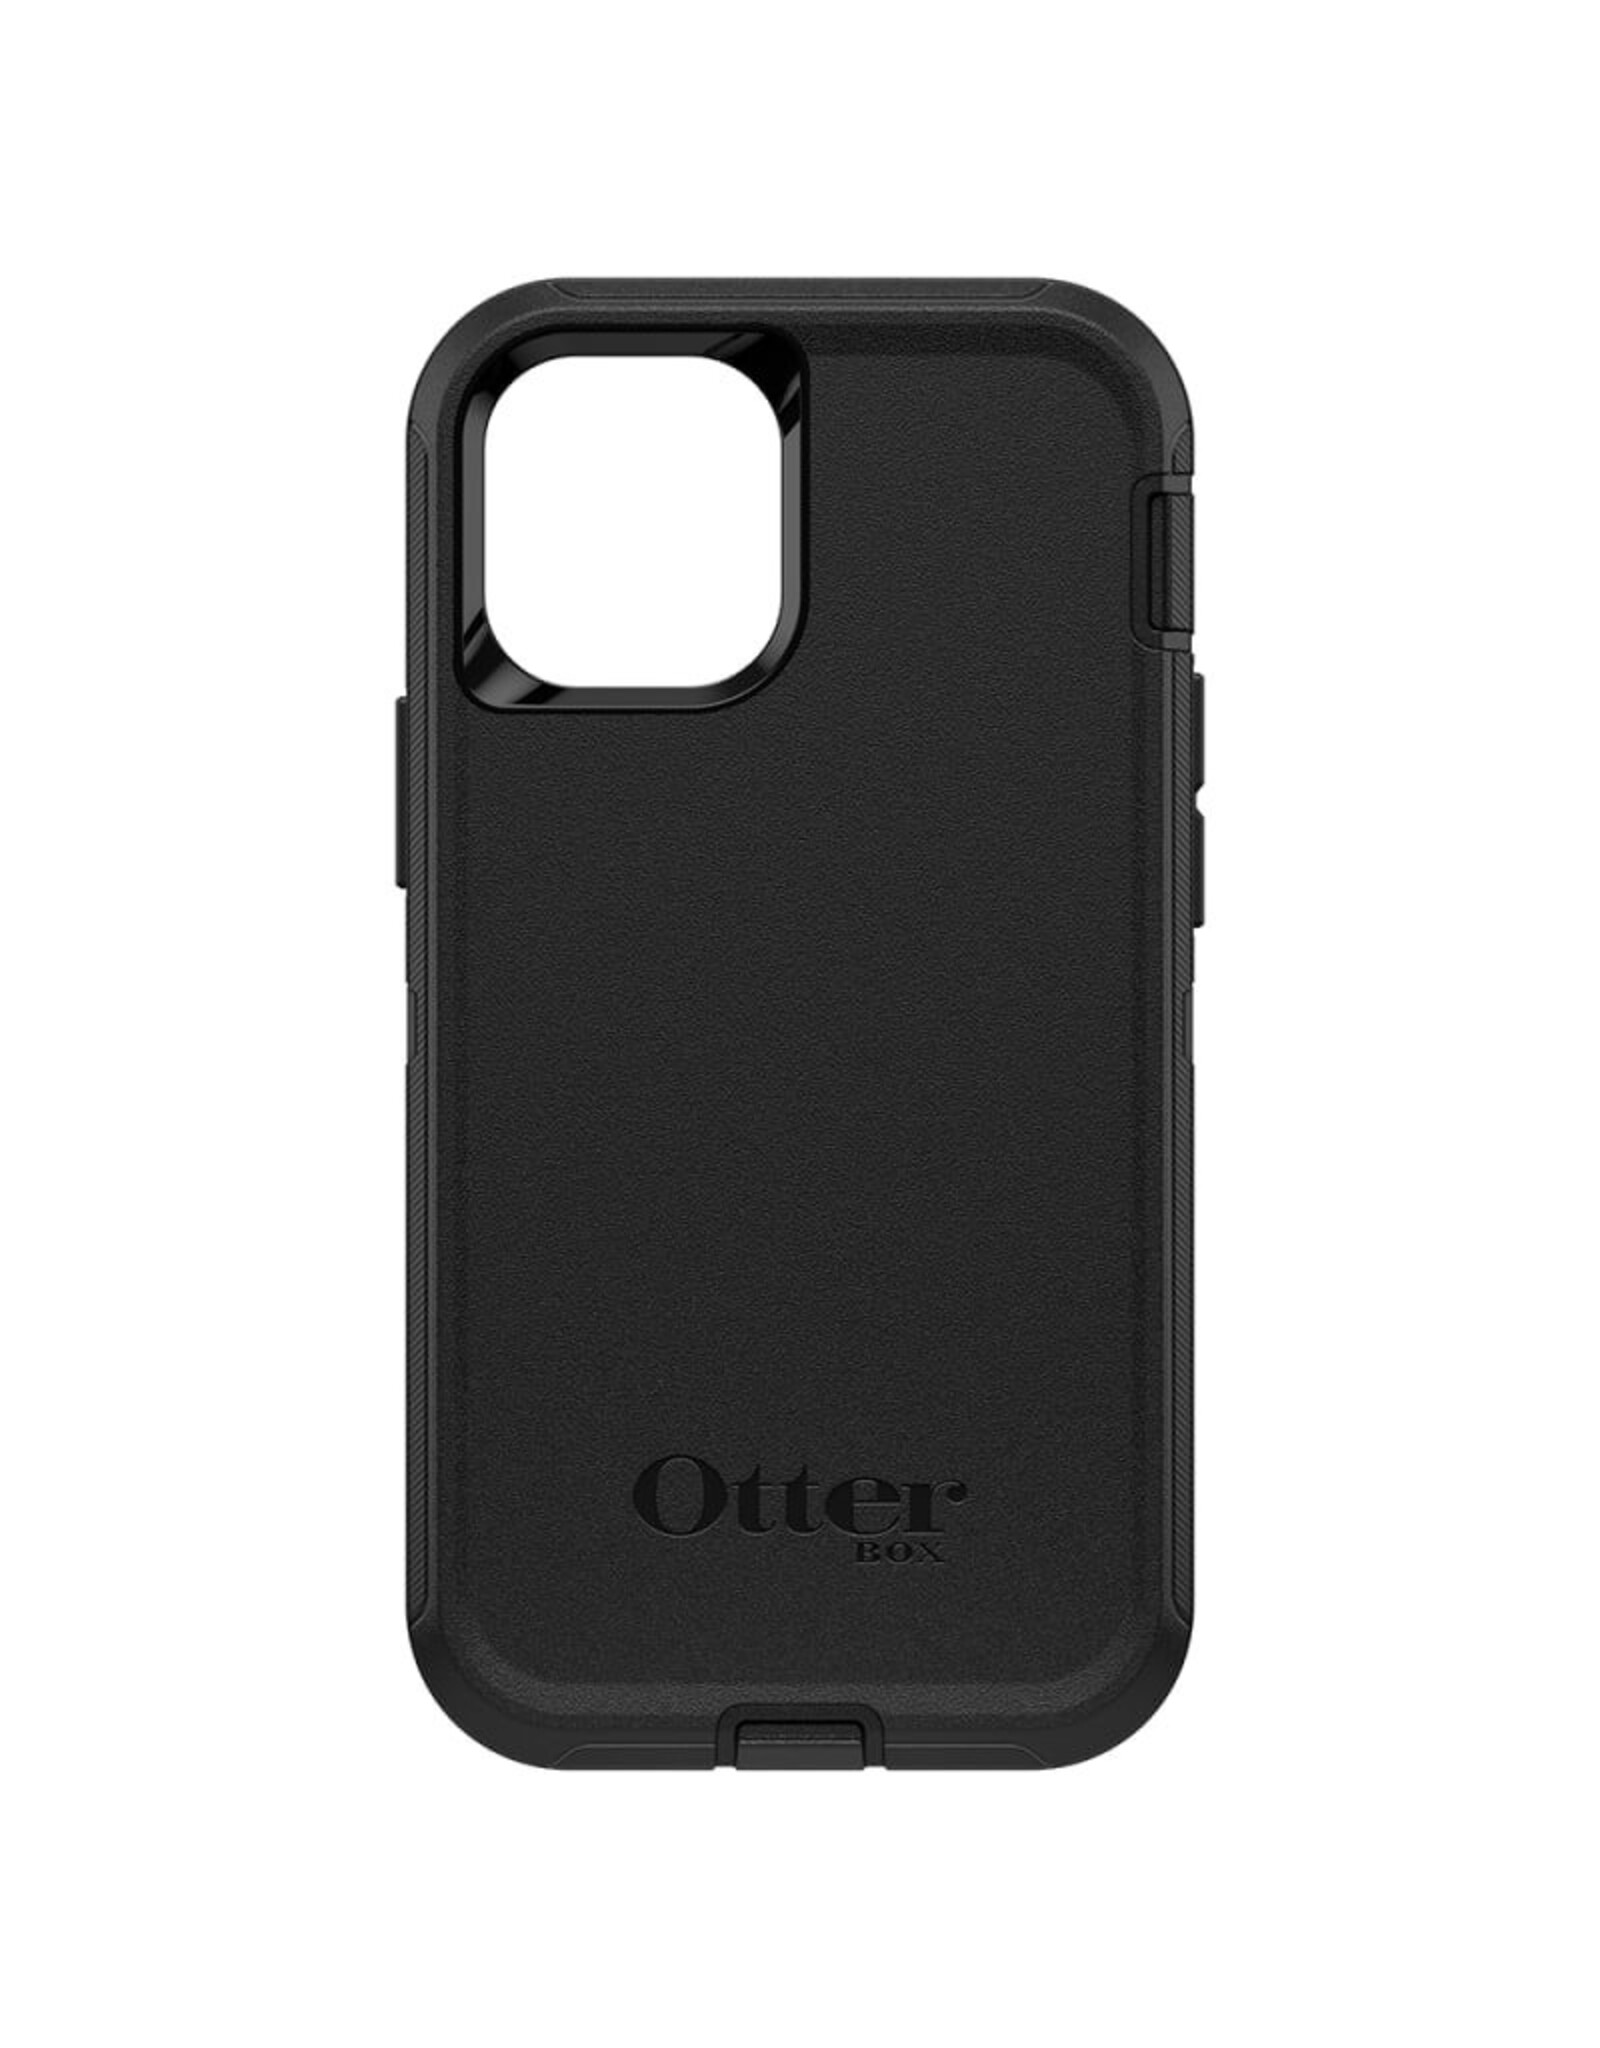 Otterbox OtterBox Defender Series For iPhone 12 mini - Black